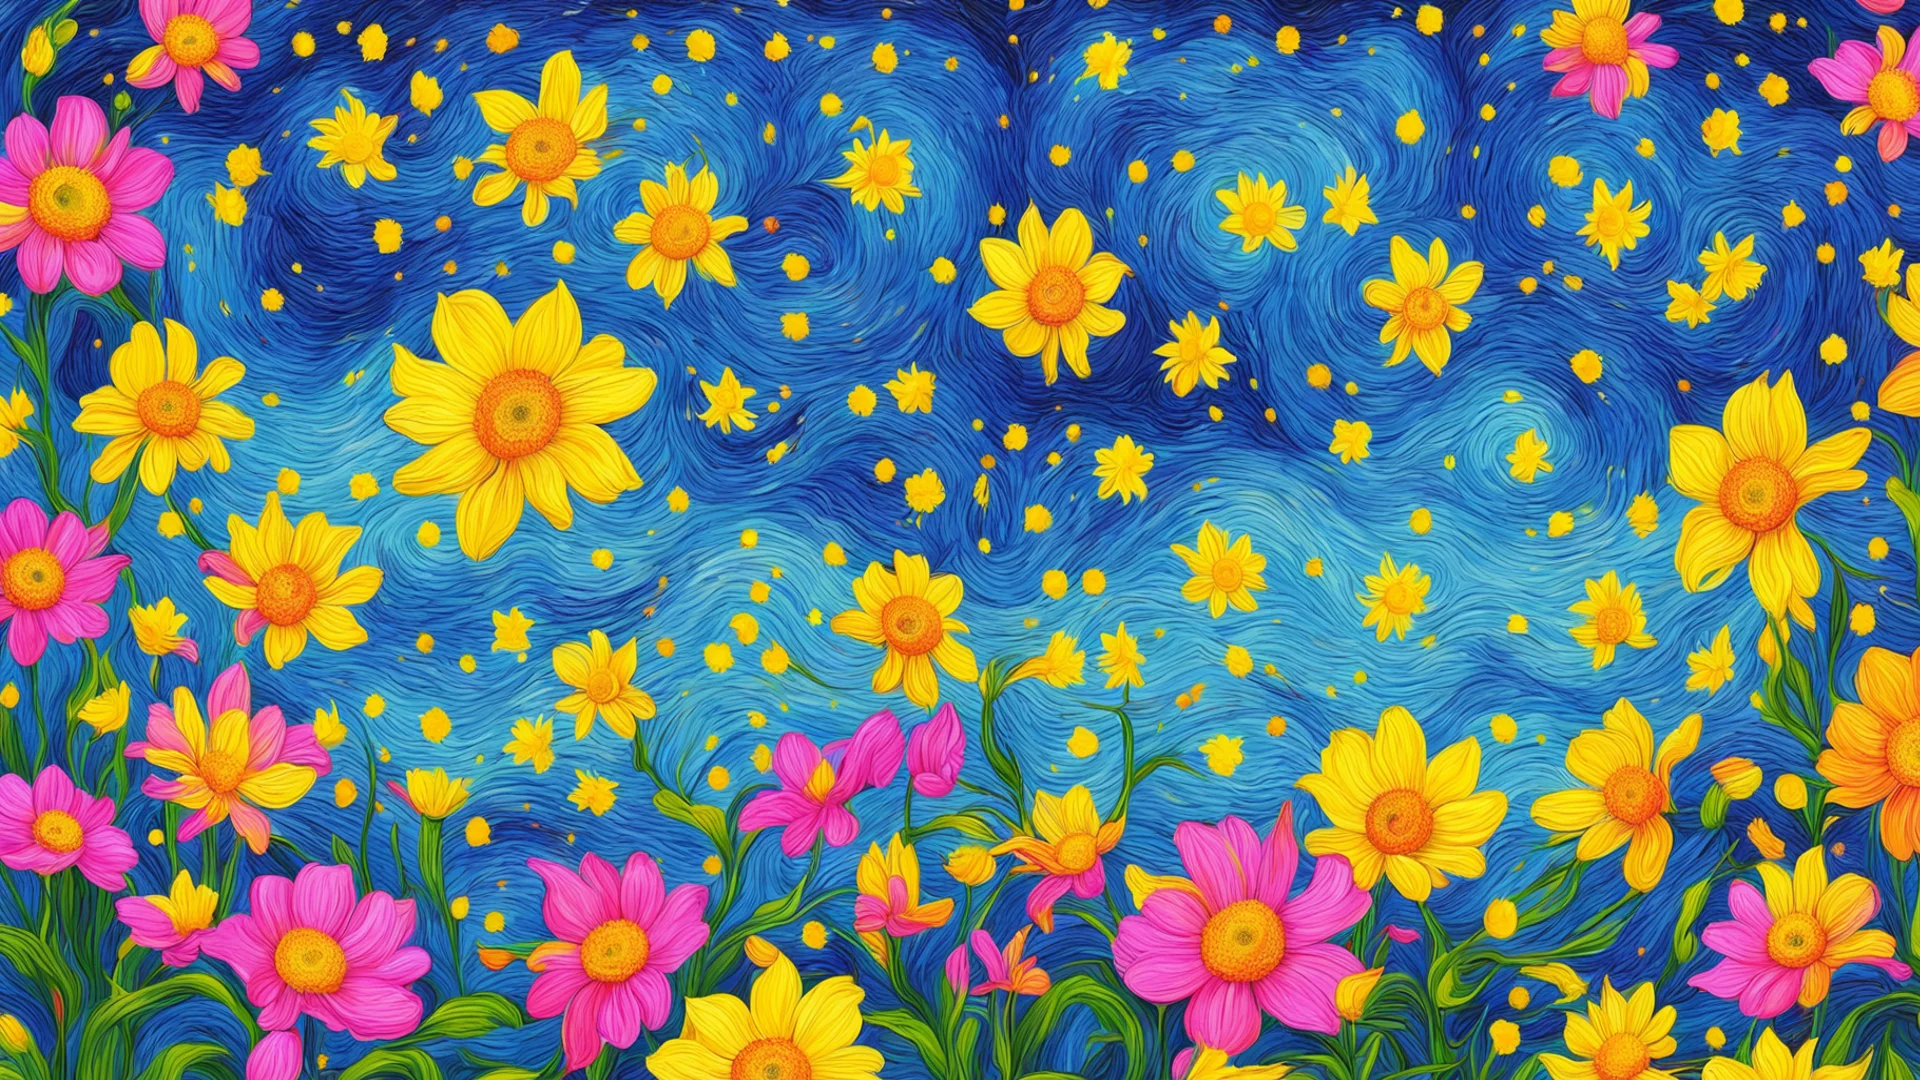 amazing amazing flowers van gogh starry night beautiful background awesome portrait 2 wide